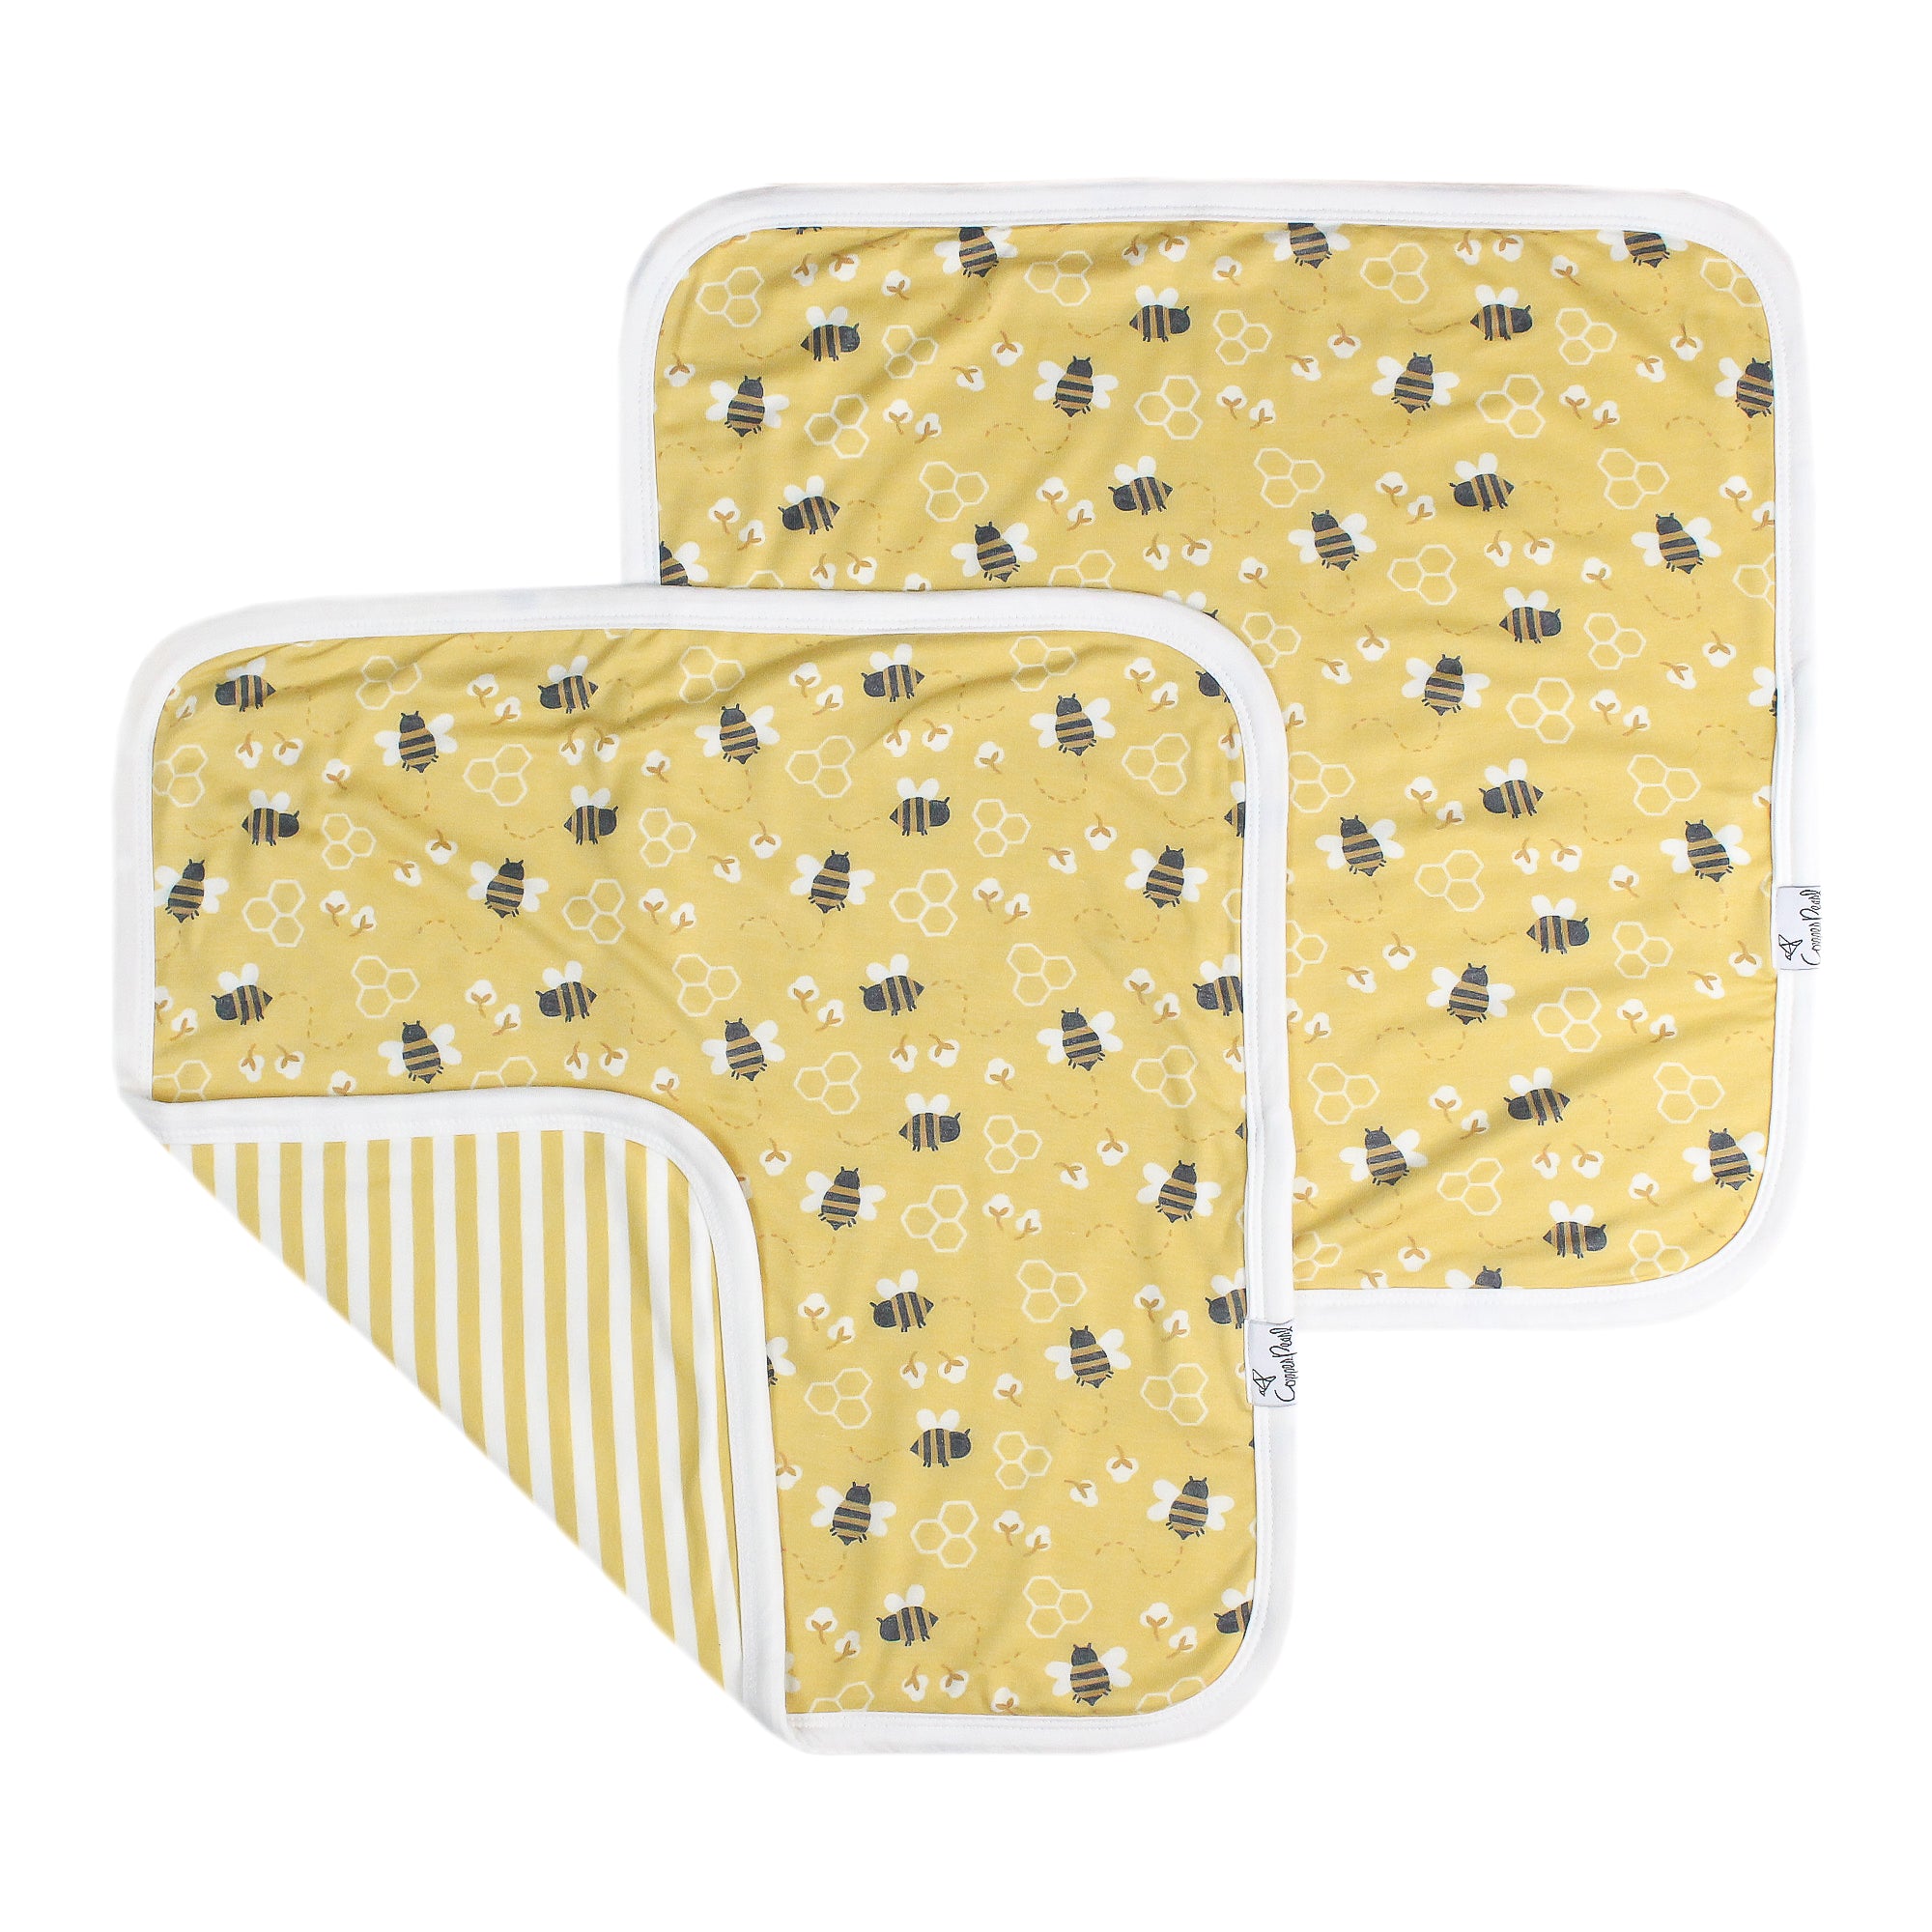 Three-Layer Security Blanket Set - Honeycomb